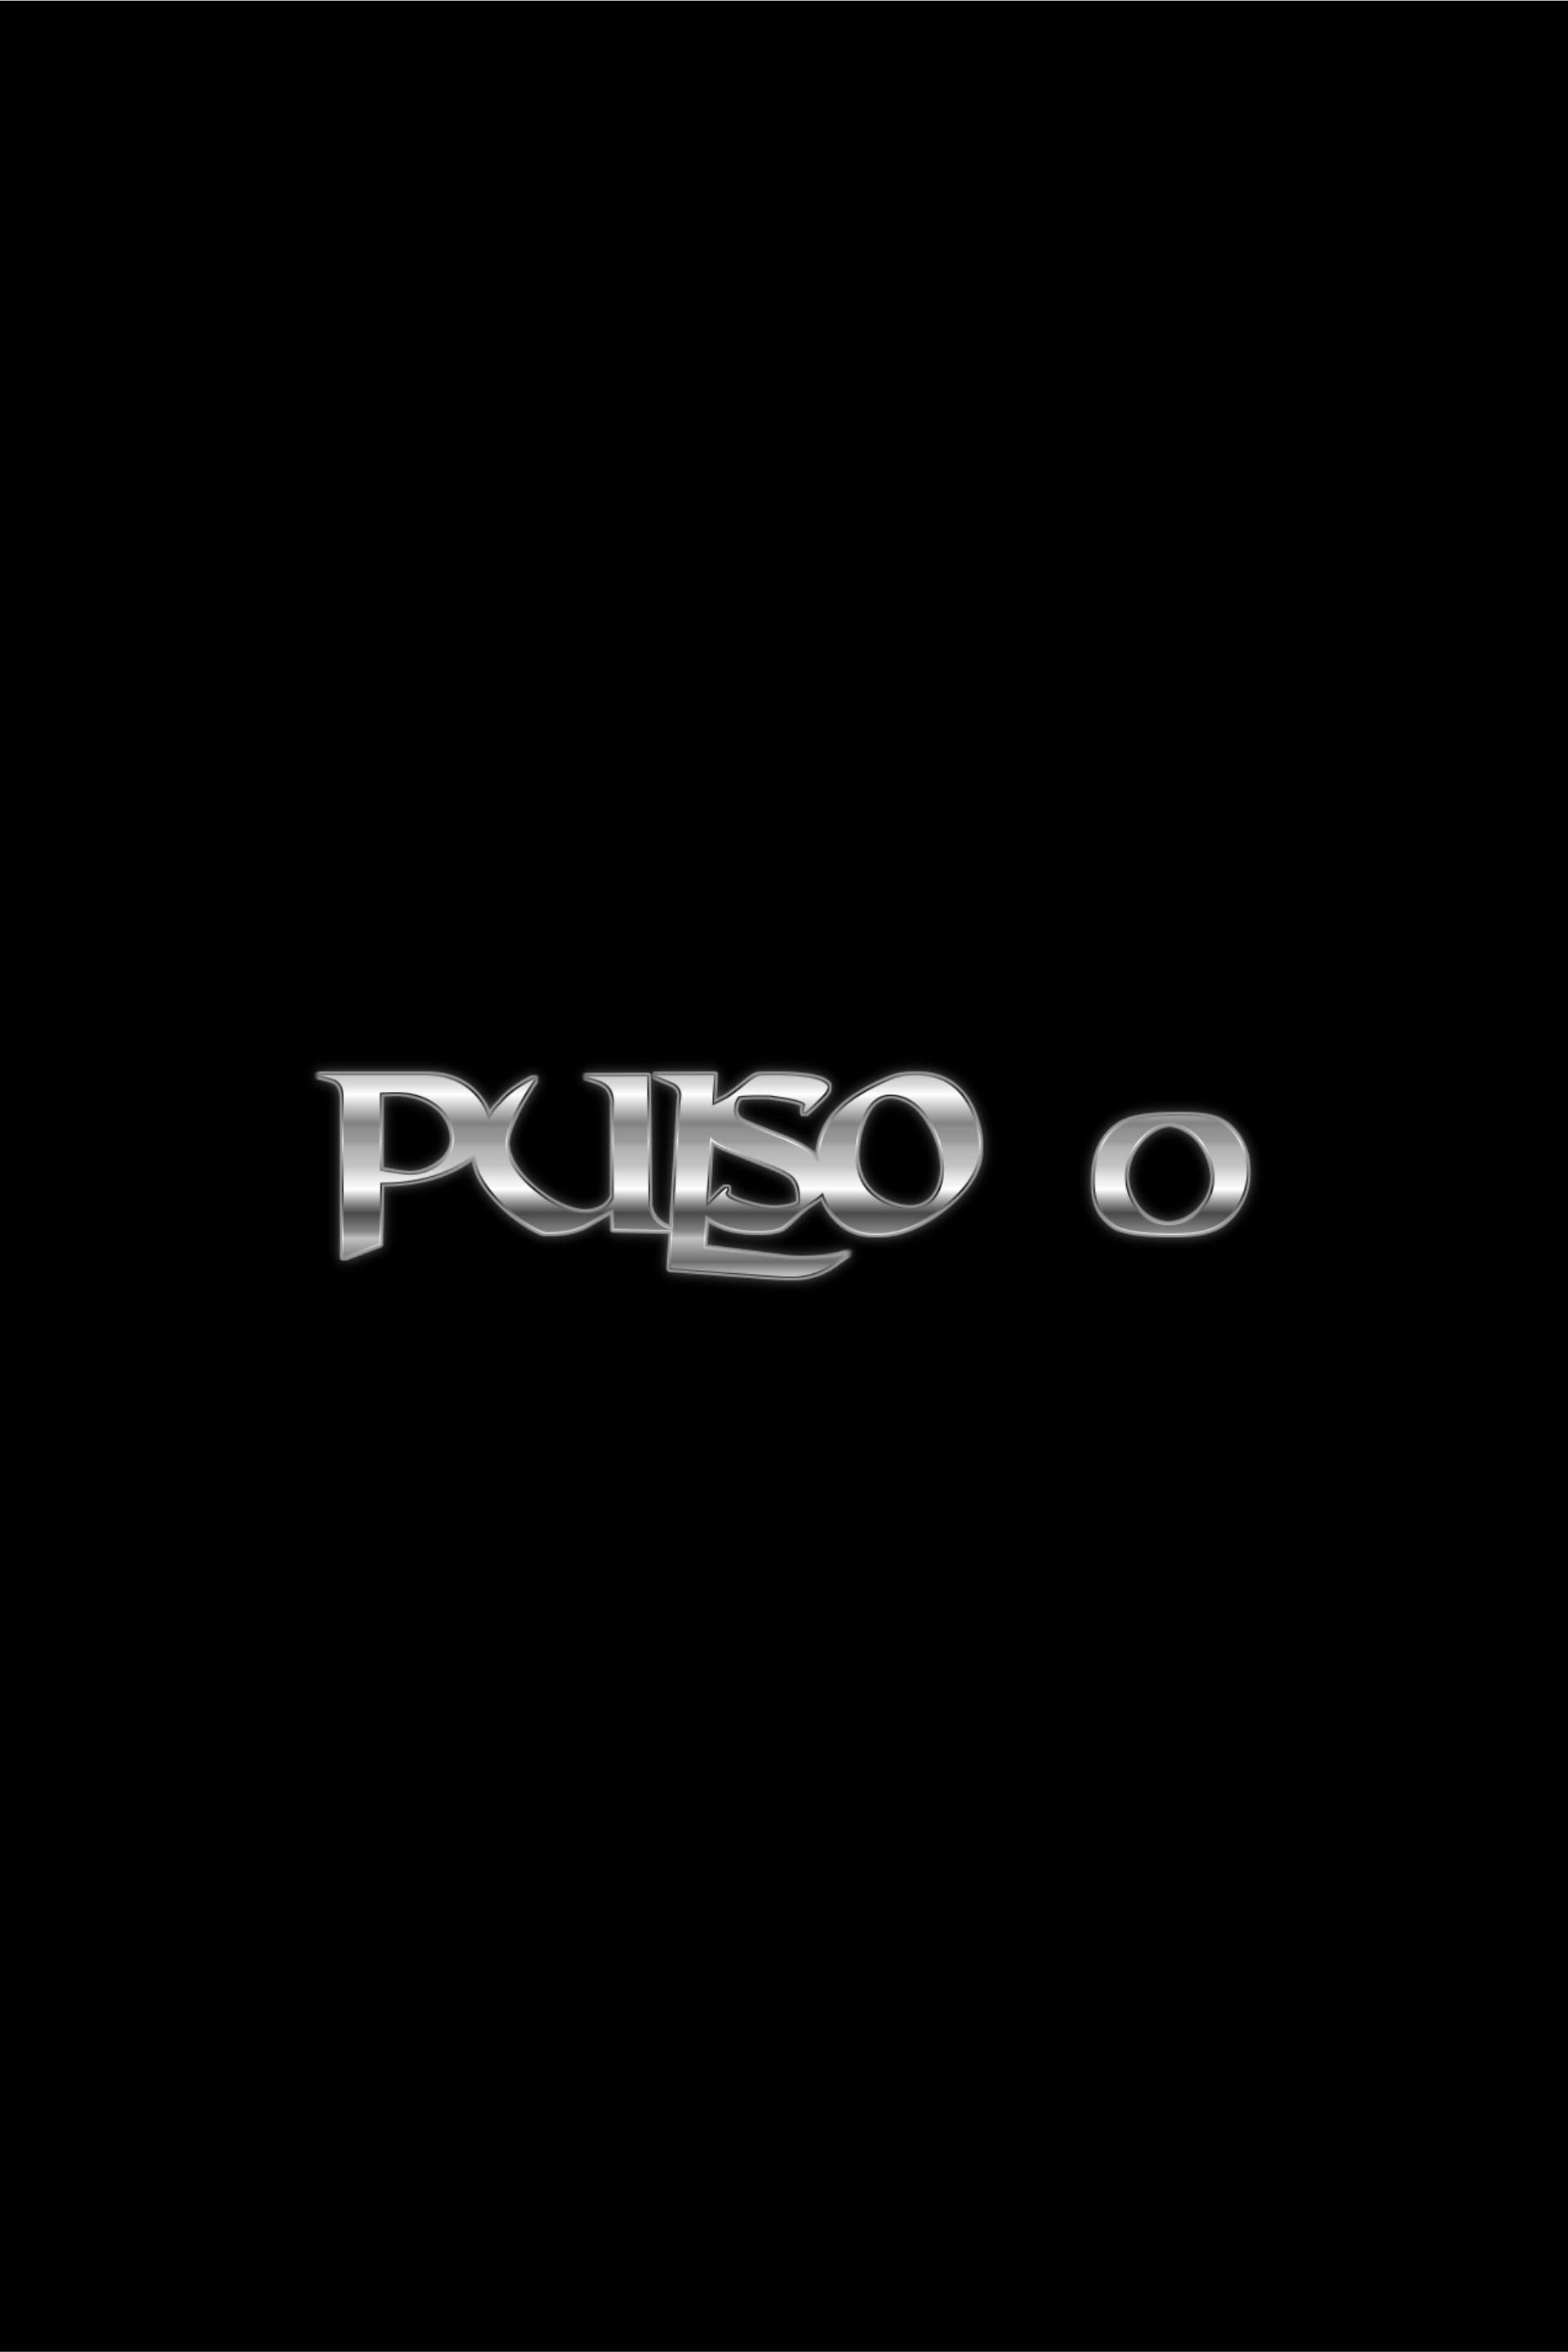 Pulso 0